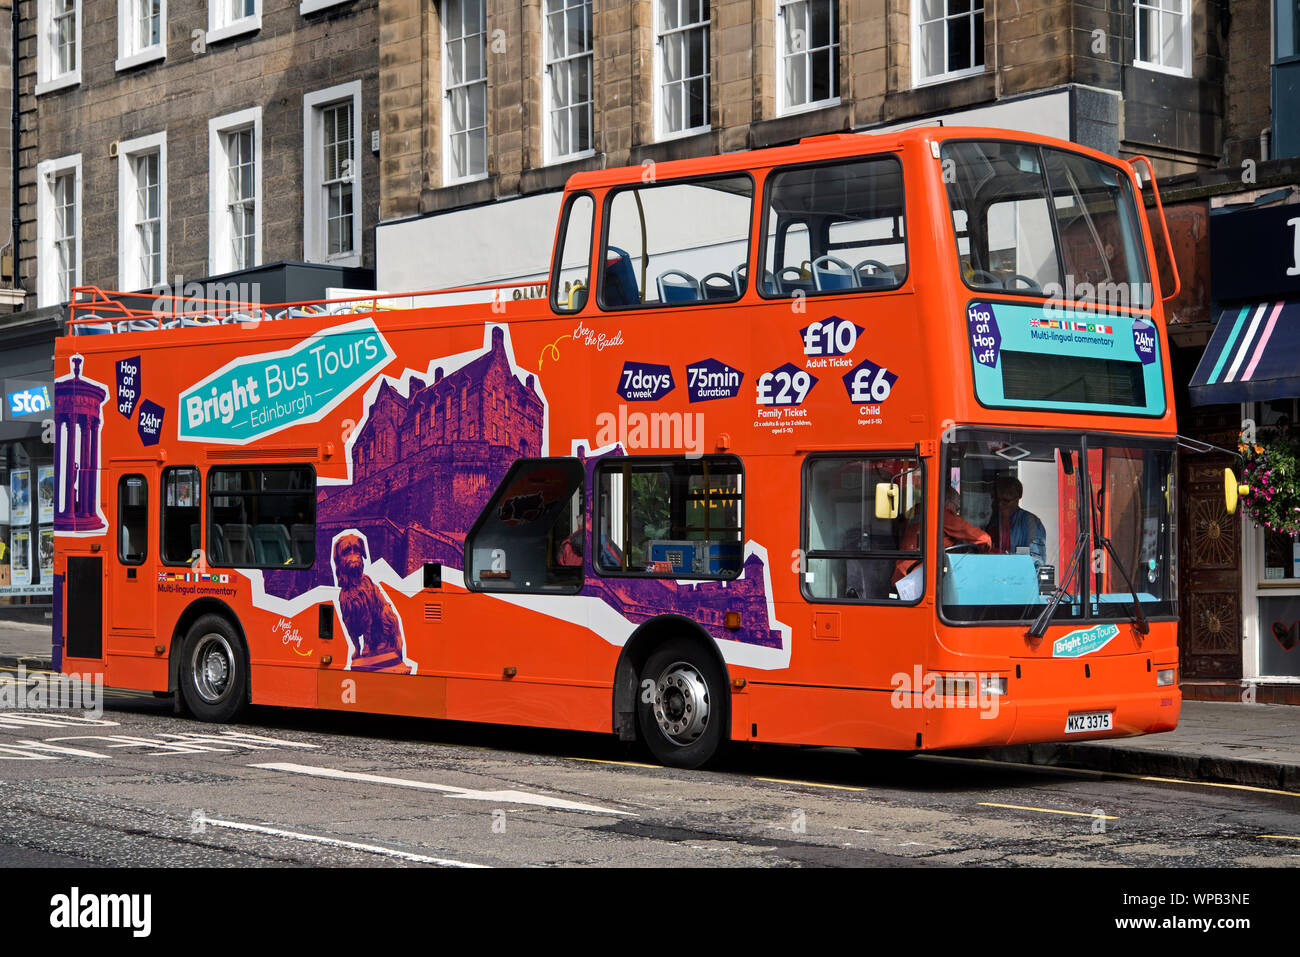 A sommità aperta Bus luminoso tours sightseeing tour bus in Hanover Street, Edimburgo, Scozia, Regno Unito. Foto Stock